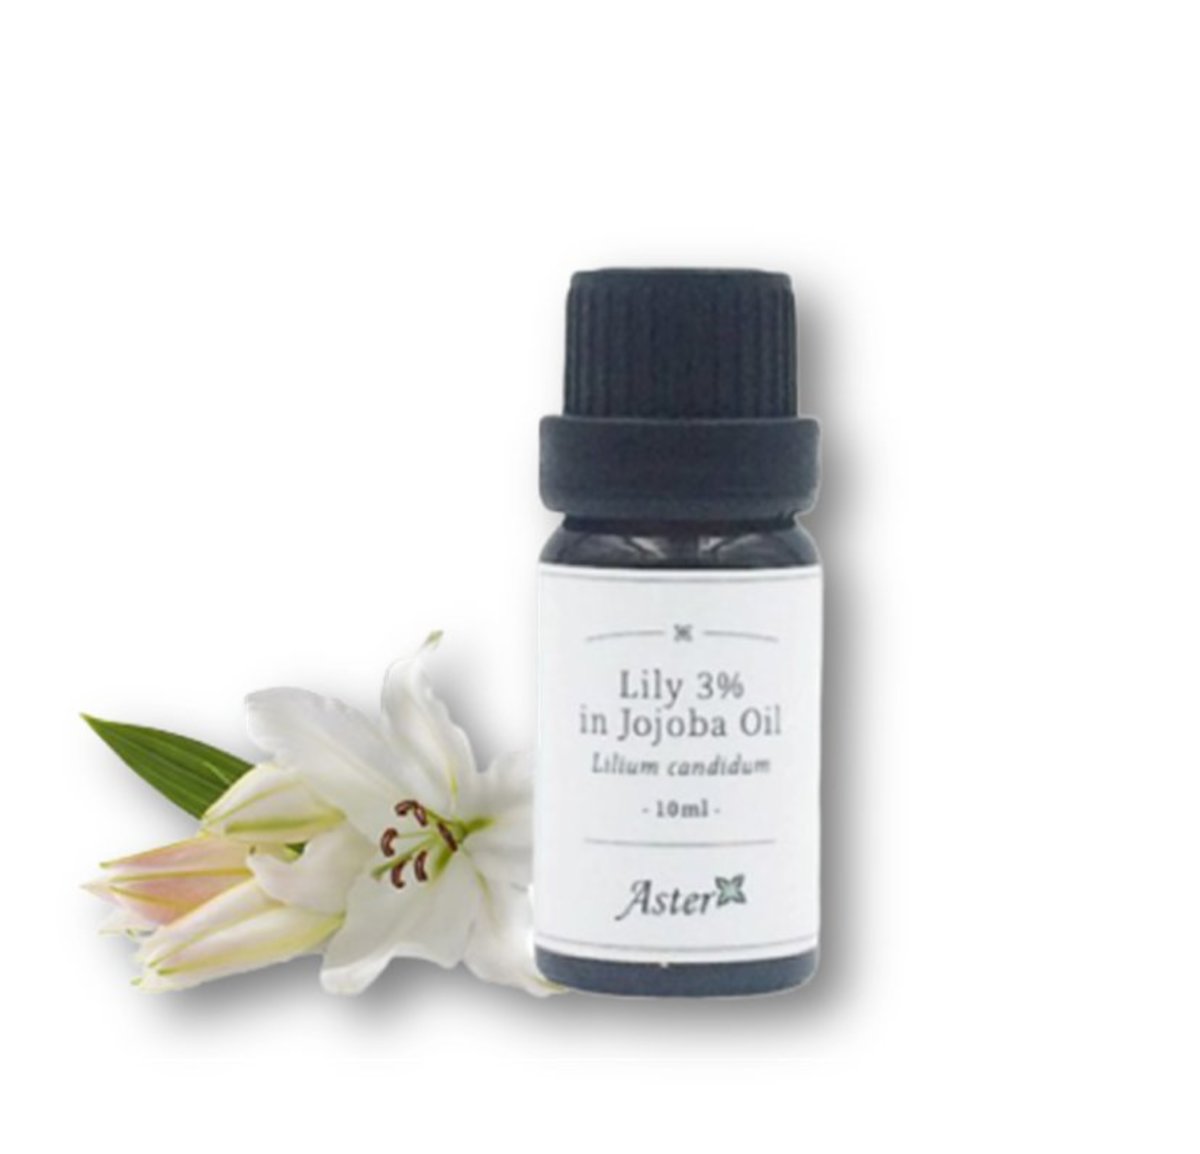 3% Lily (Lilium candidum) in Organic Jojoba Oil (Simmondsia chinensis)  - 10ml